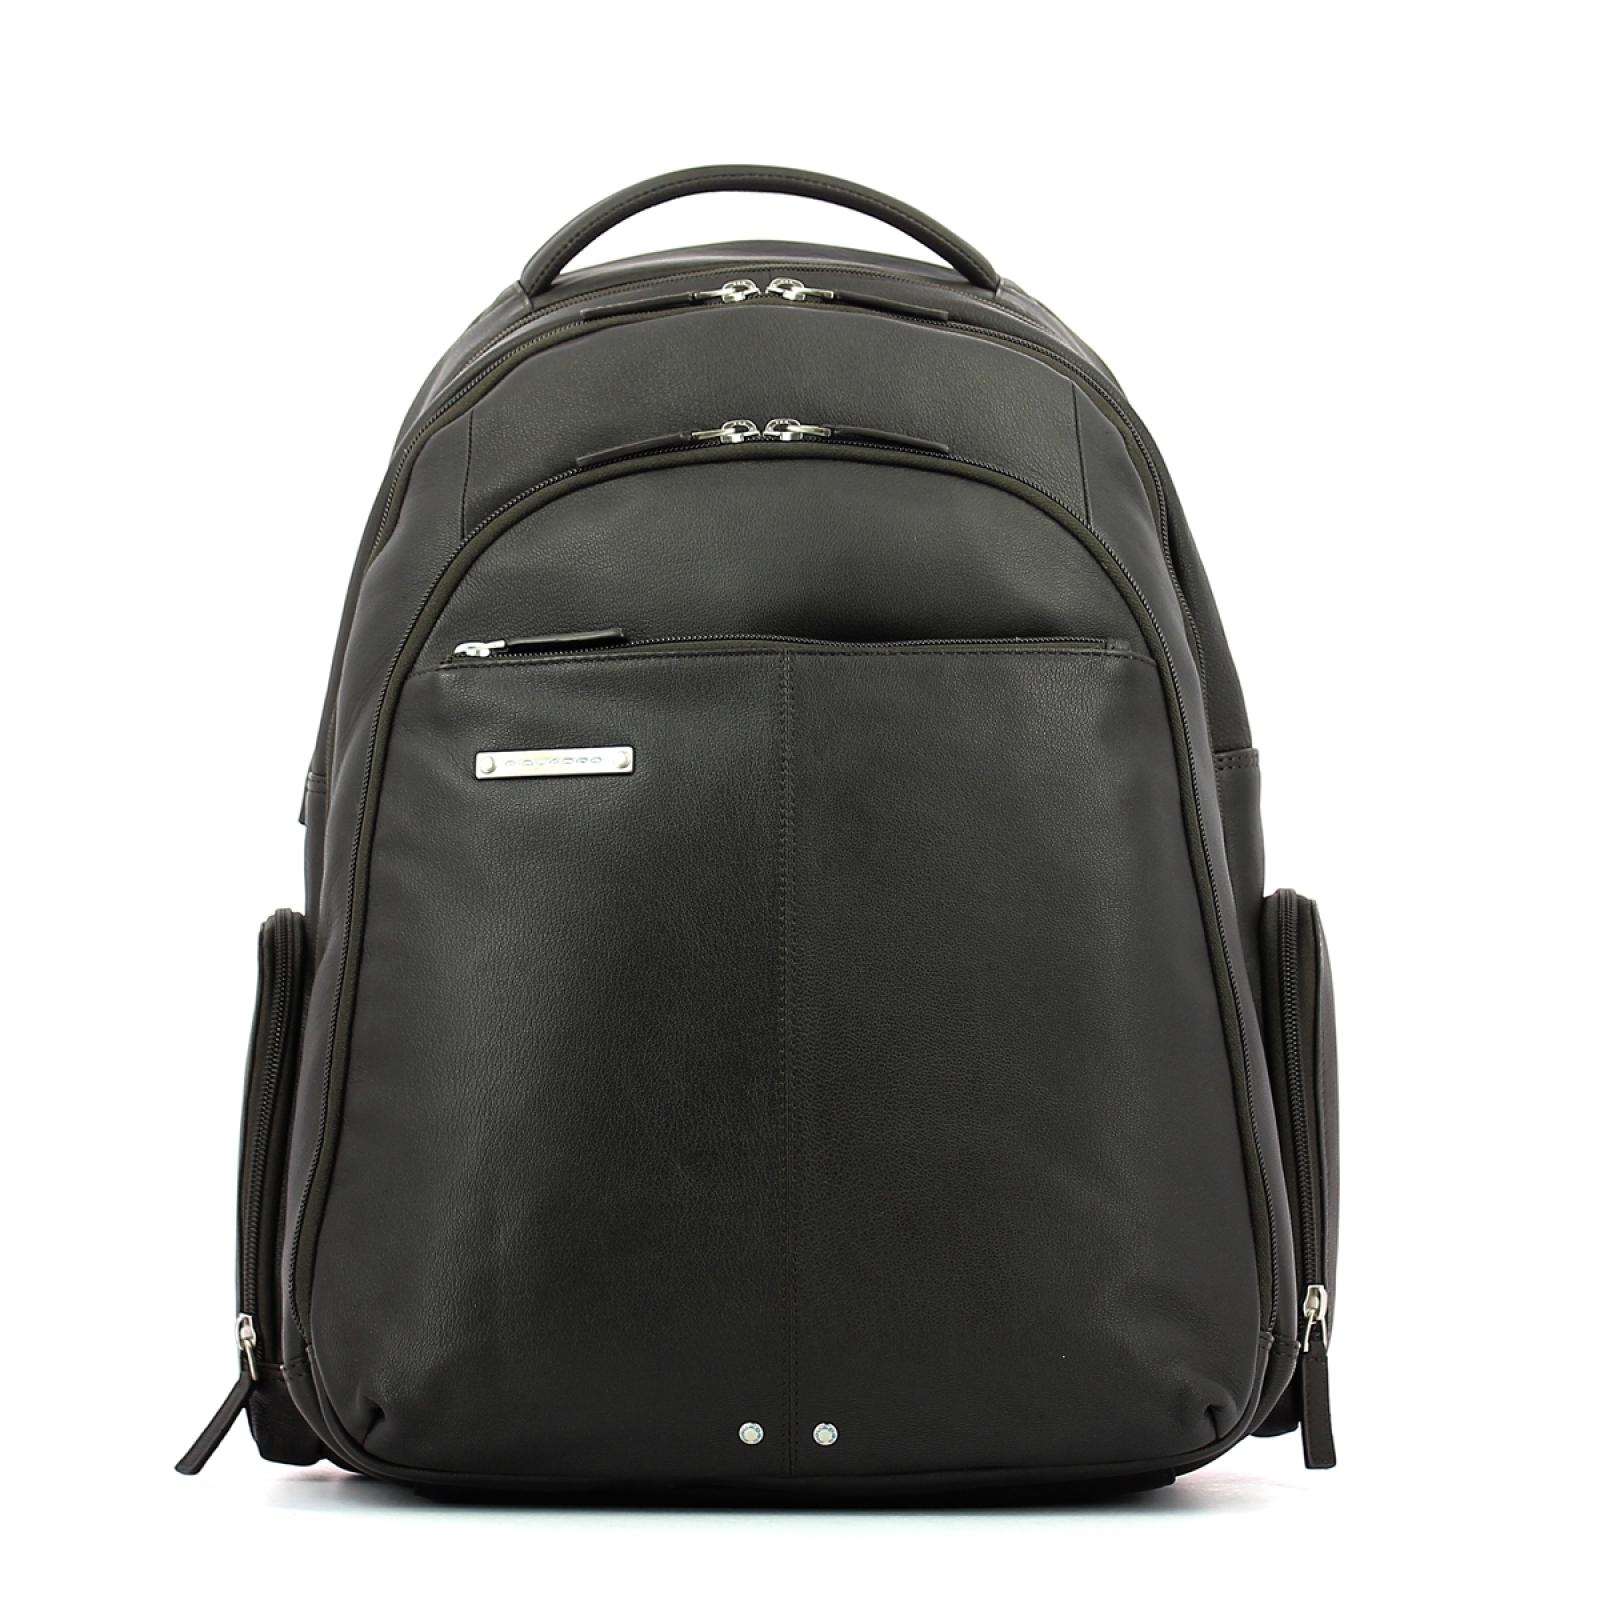 Leather Laptop Backpack Piquadro 15.0-TESTA/MORO-UN